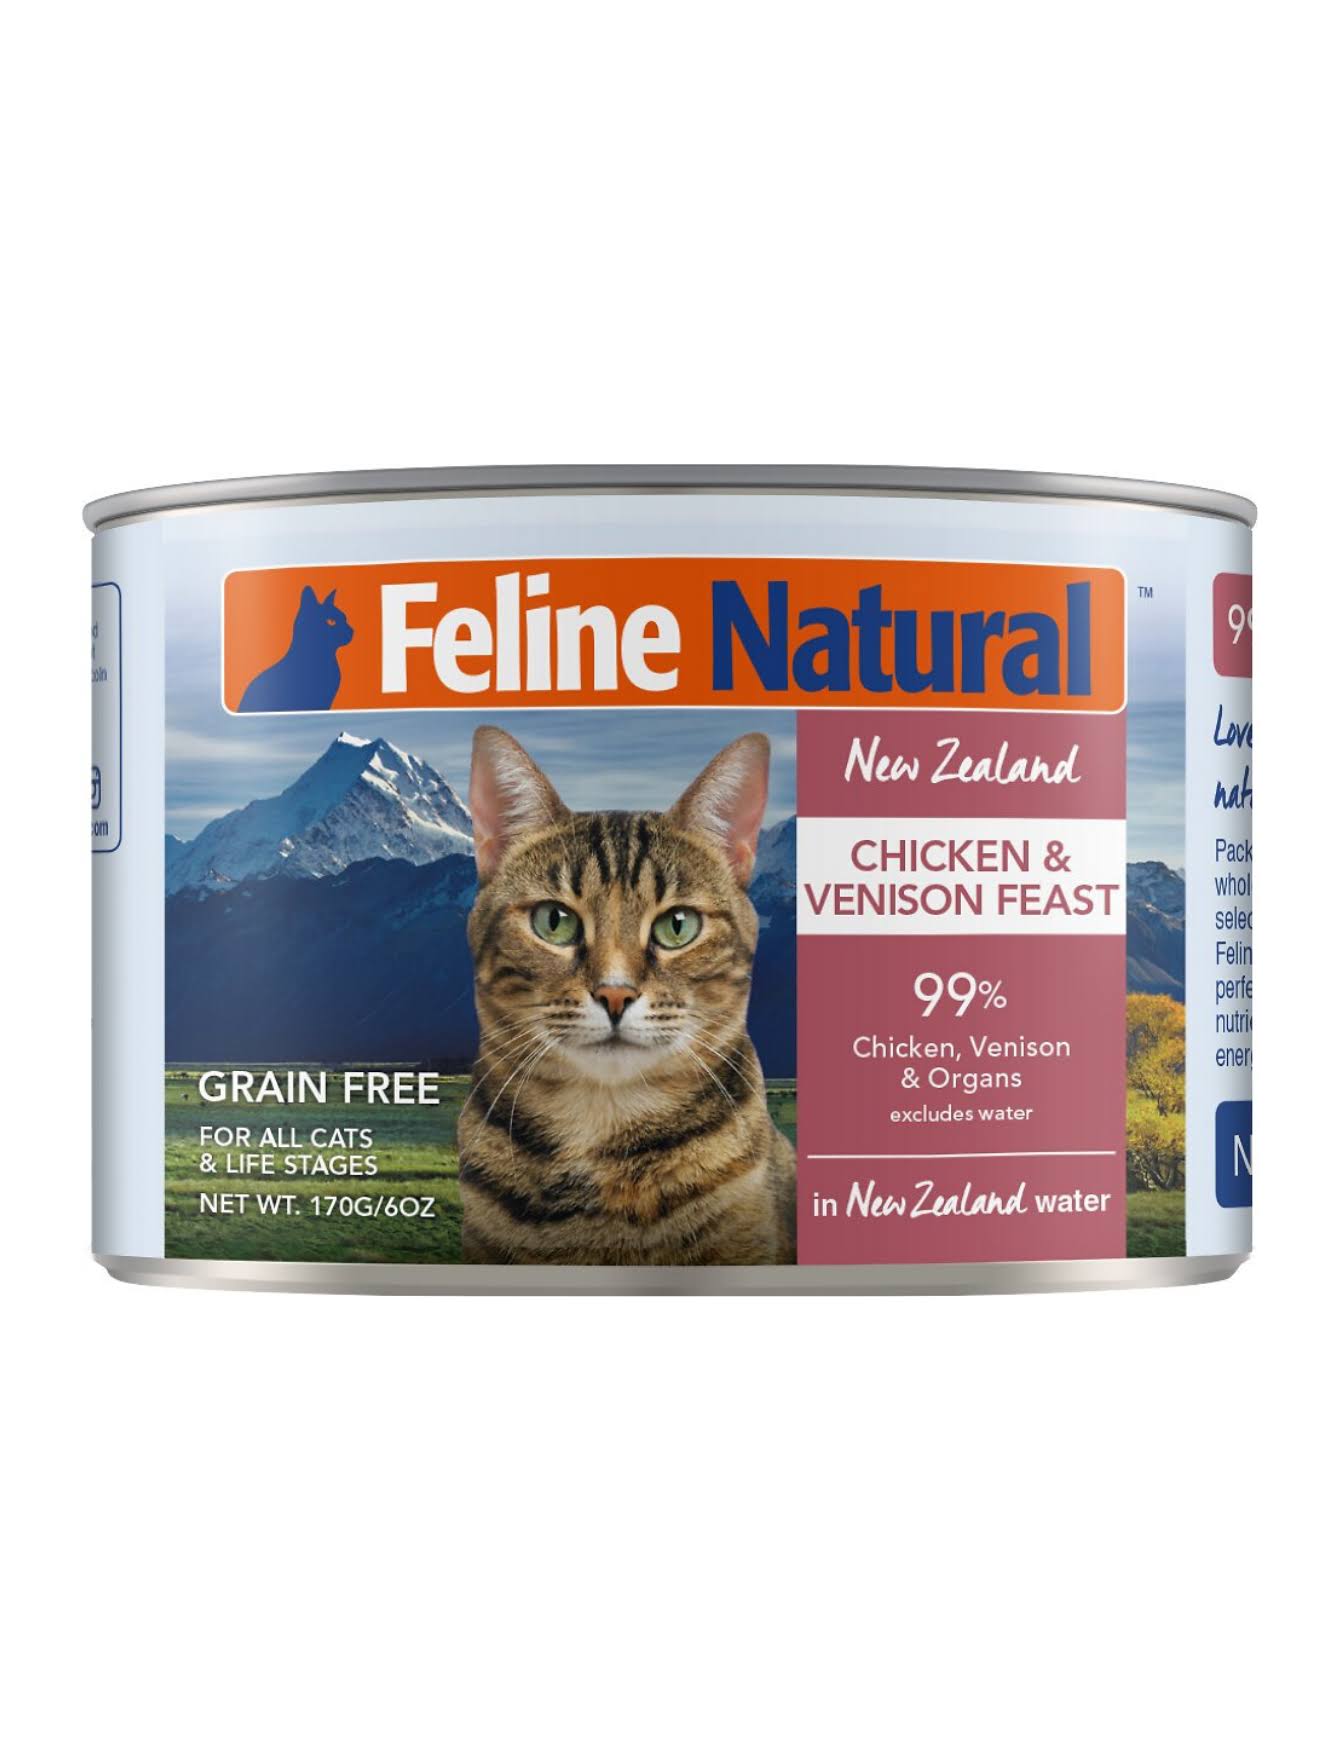 Feline Natural Cat Food - Chicken Venison Feast, 3oz